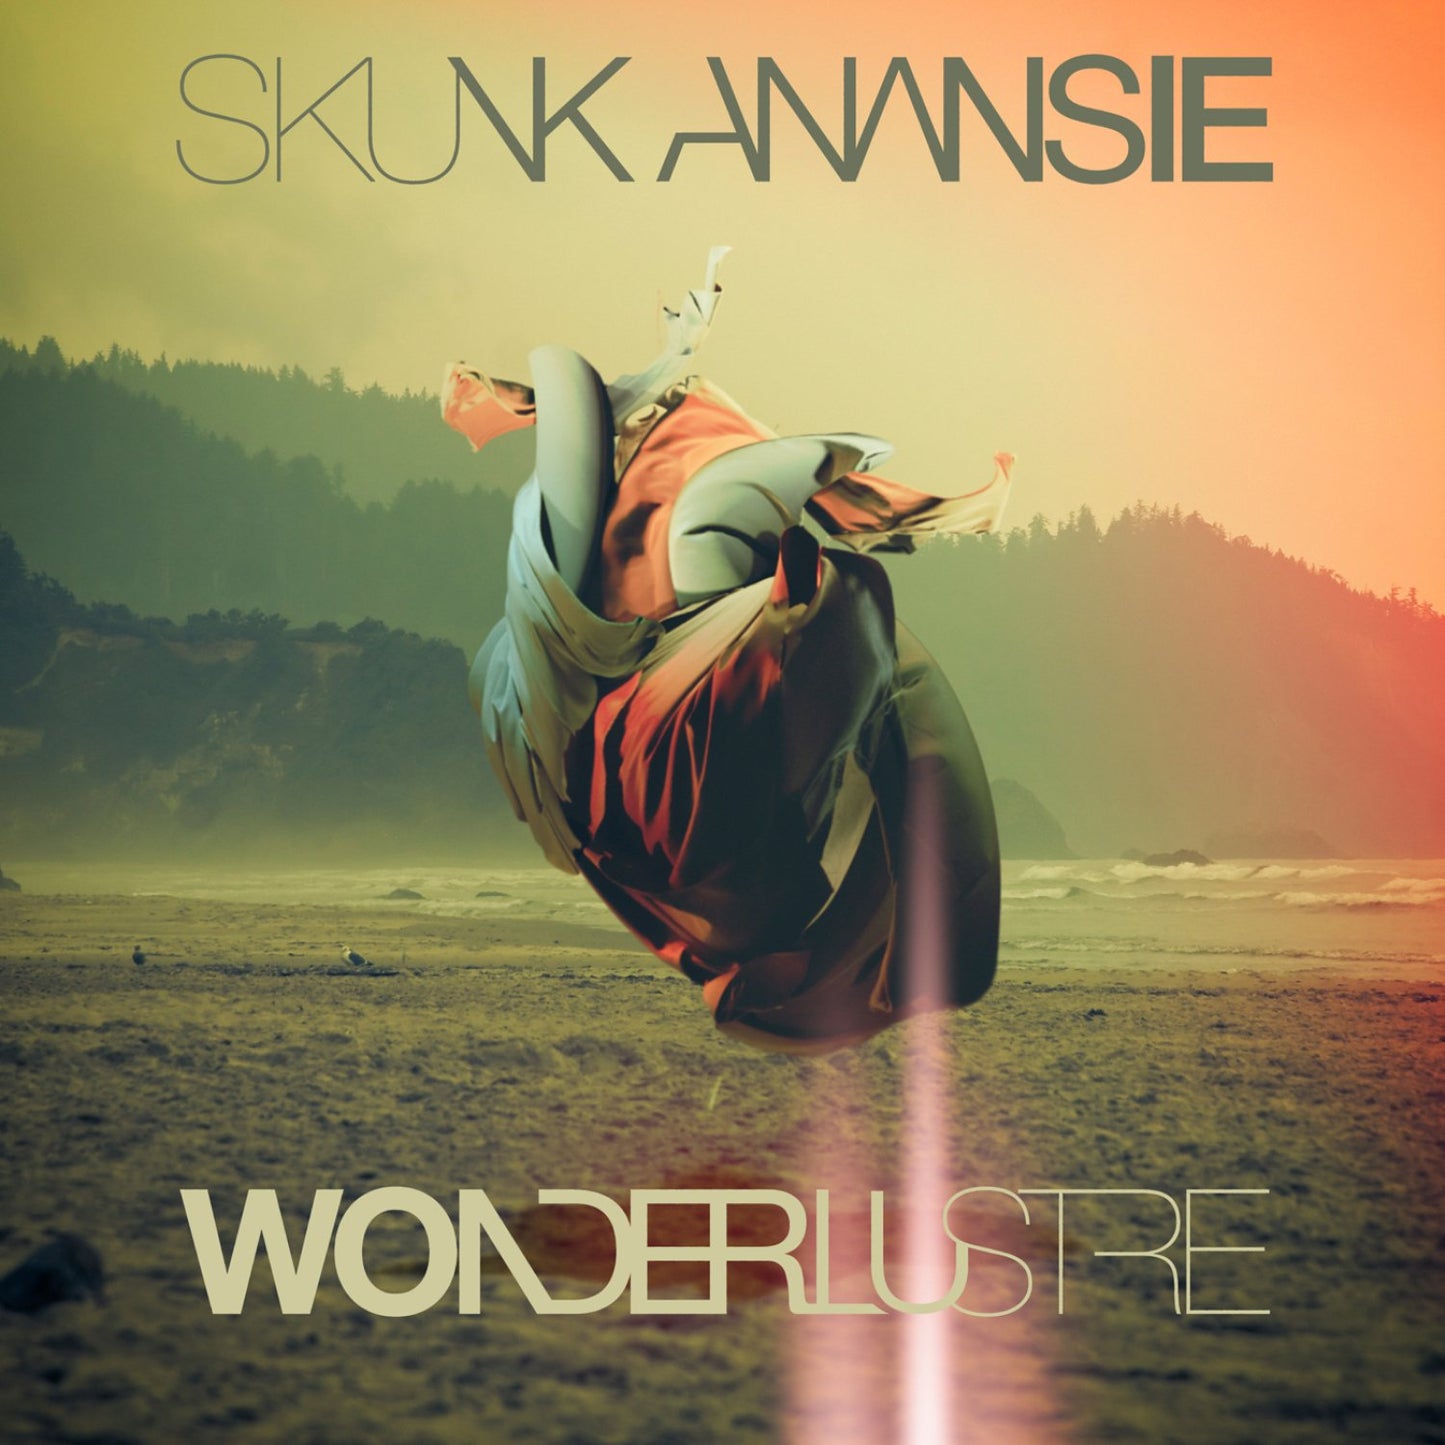 Wonderlustre - CD & DVD Limited Edition | Skunk Anansie Official Store